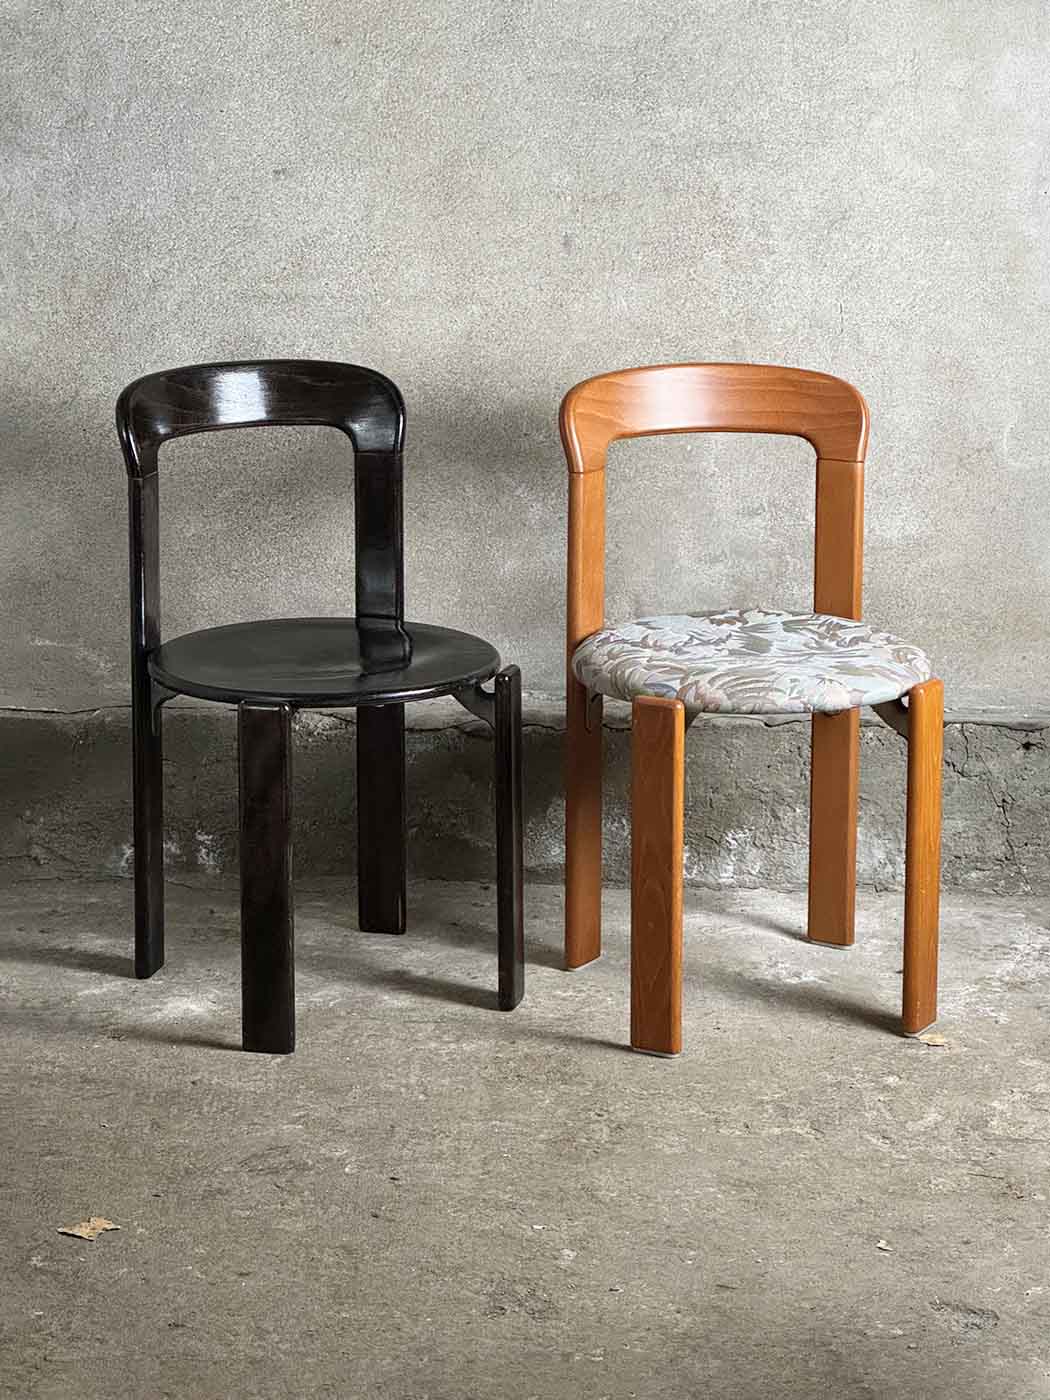 bruno rey vintage chairs krzeslarz